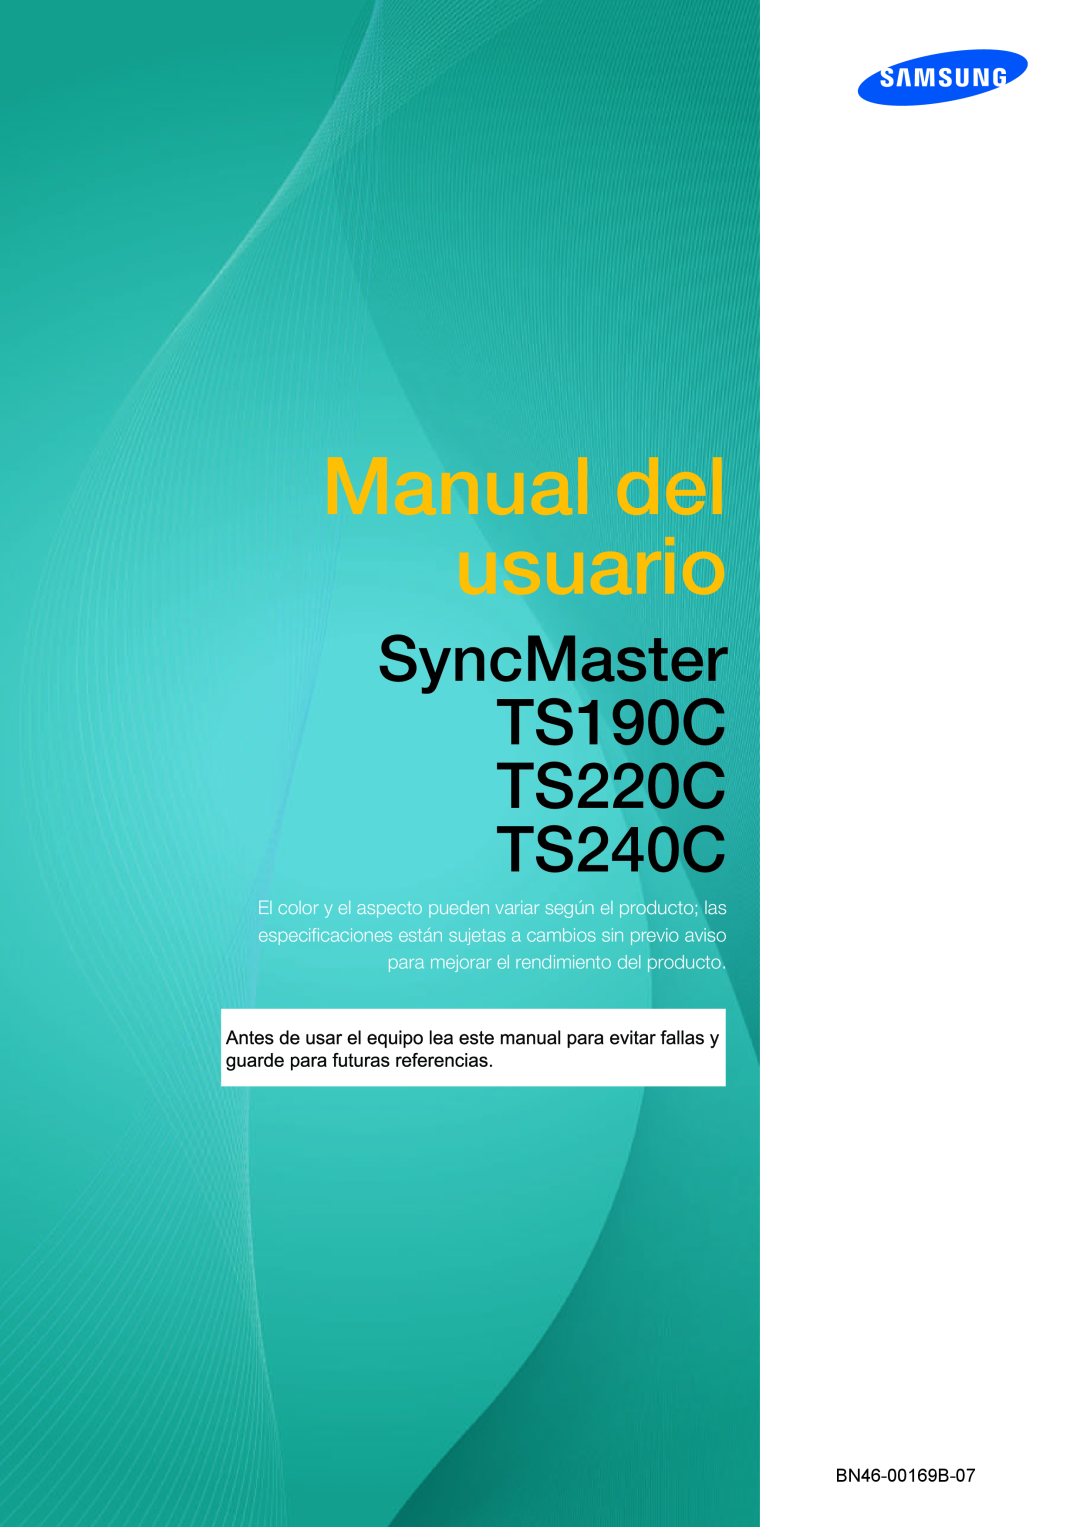 Samsung LF24TSCTBAN/EN, LF19TSCTBAN/EN manual Manual del usuario, SyncMaster TS190C TS220C TS240C, BN46-00169B-07 